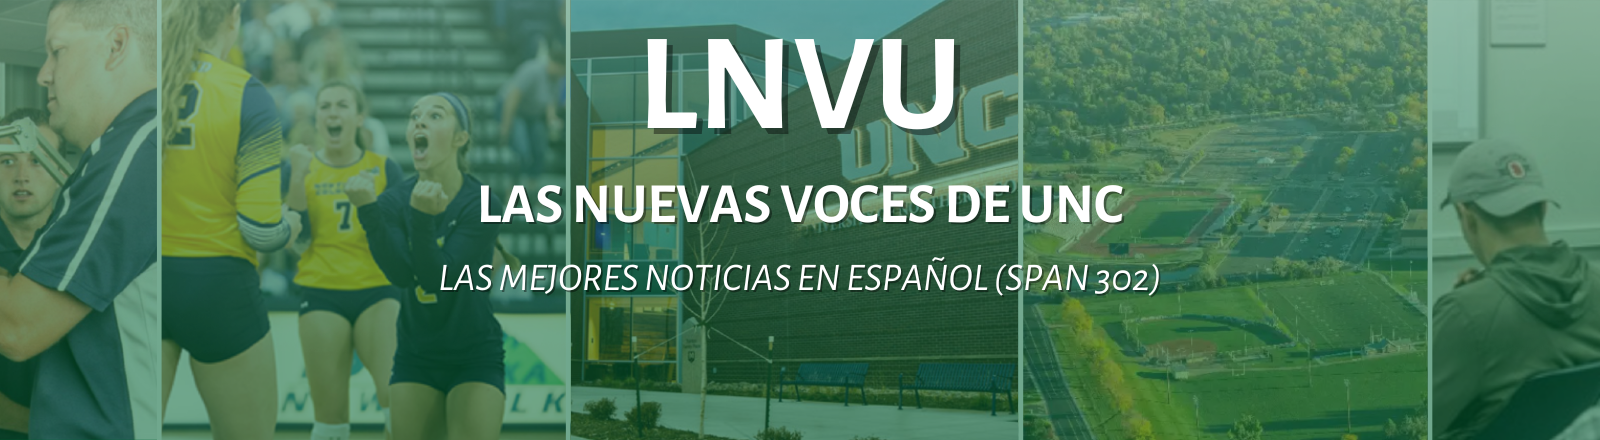 LNVU header image with logo